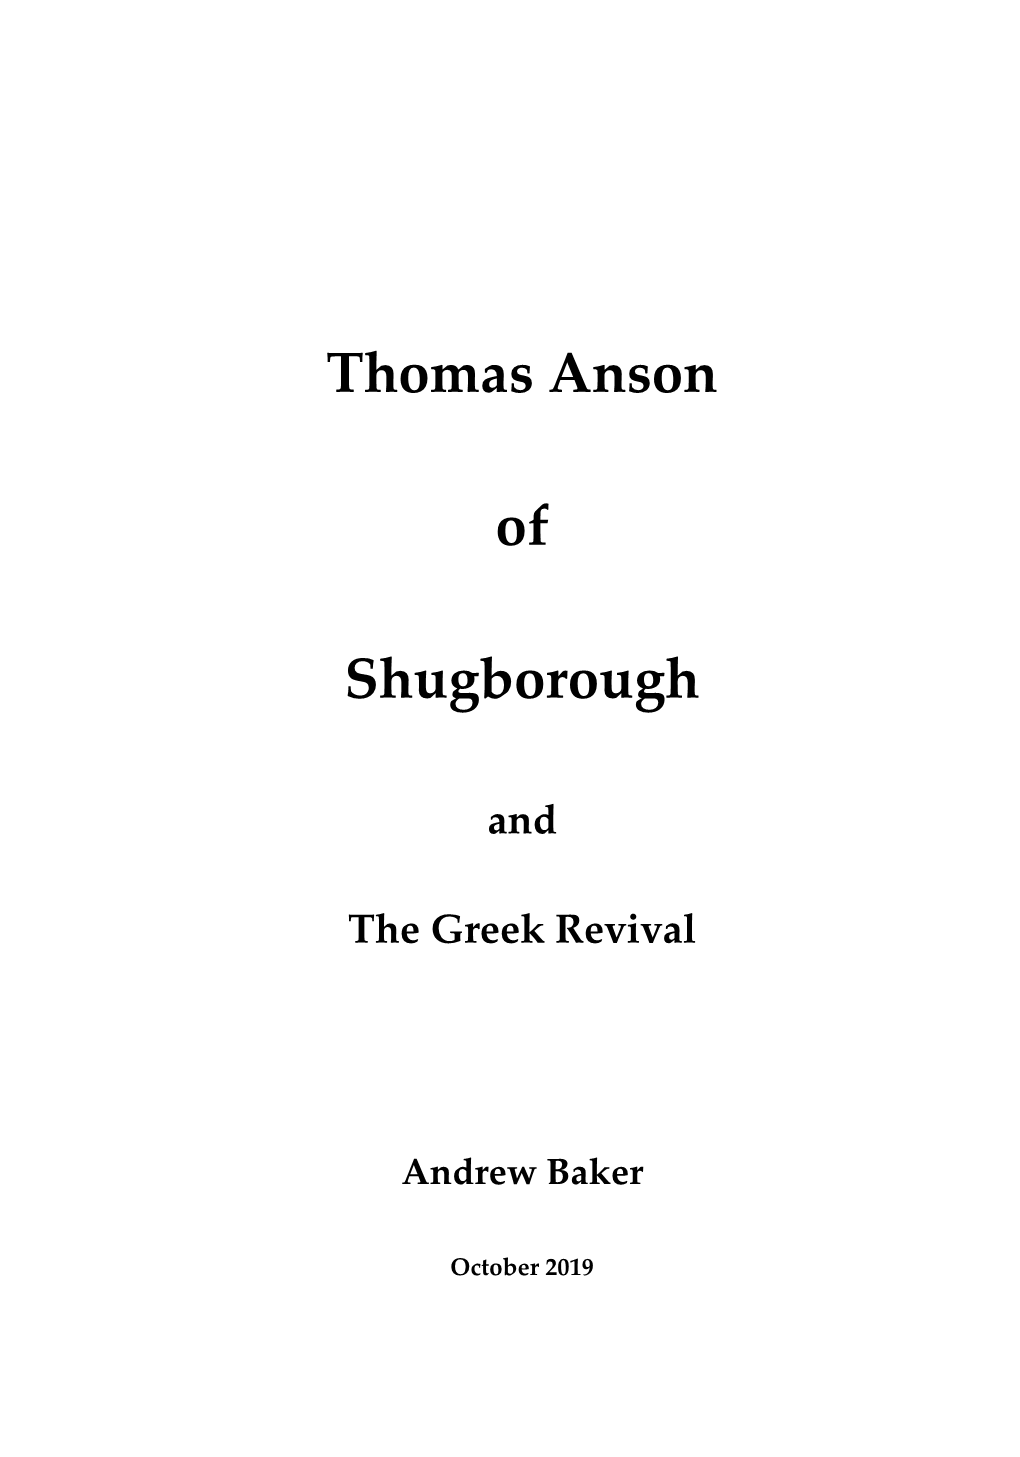 Thomas Anson of Shugborough